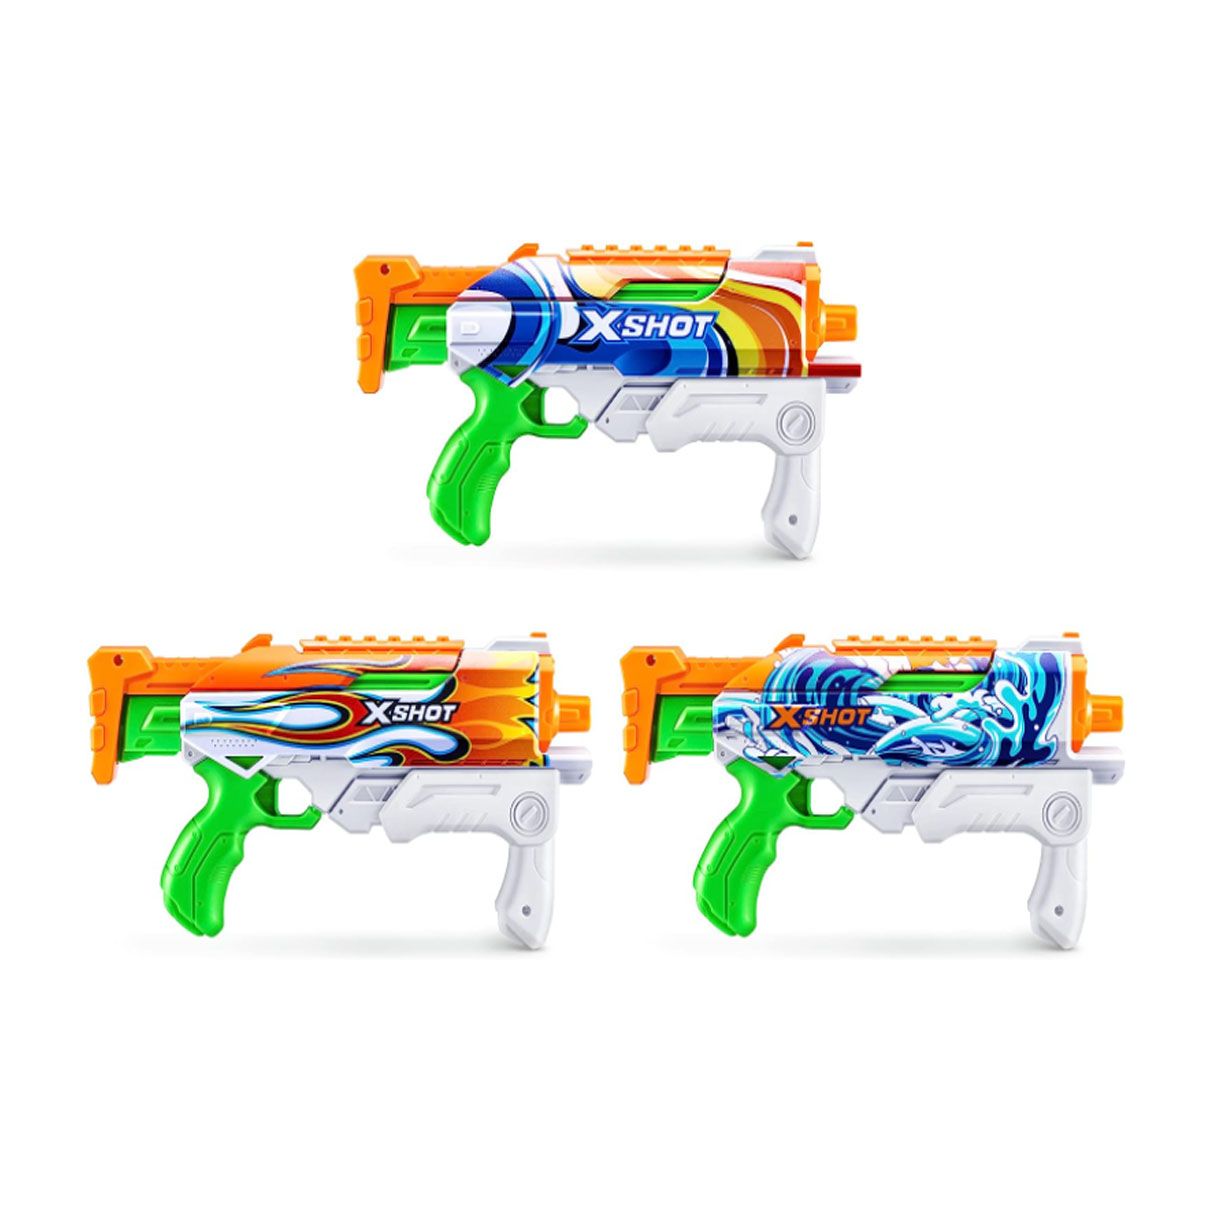 x-shot pistola de agua fast fill skins (zuru - 11854)